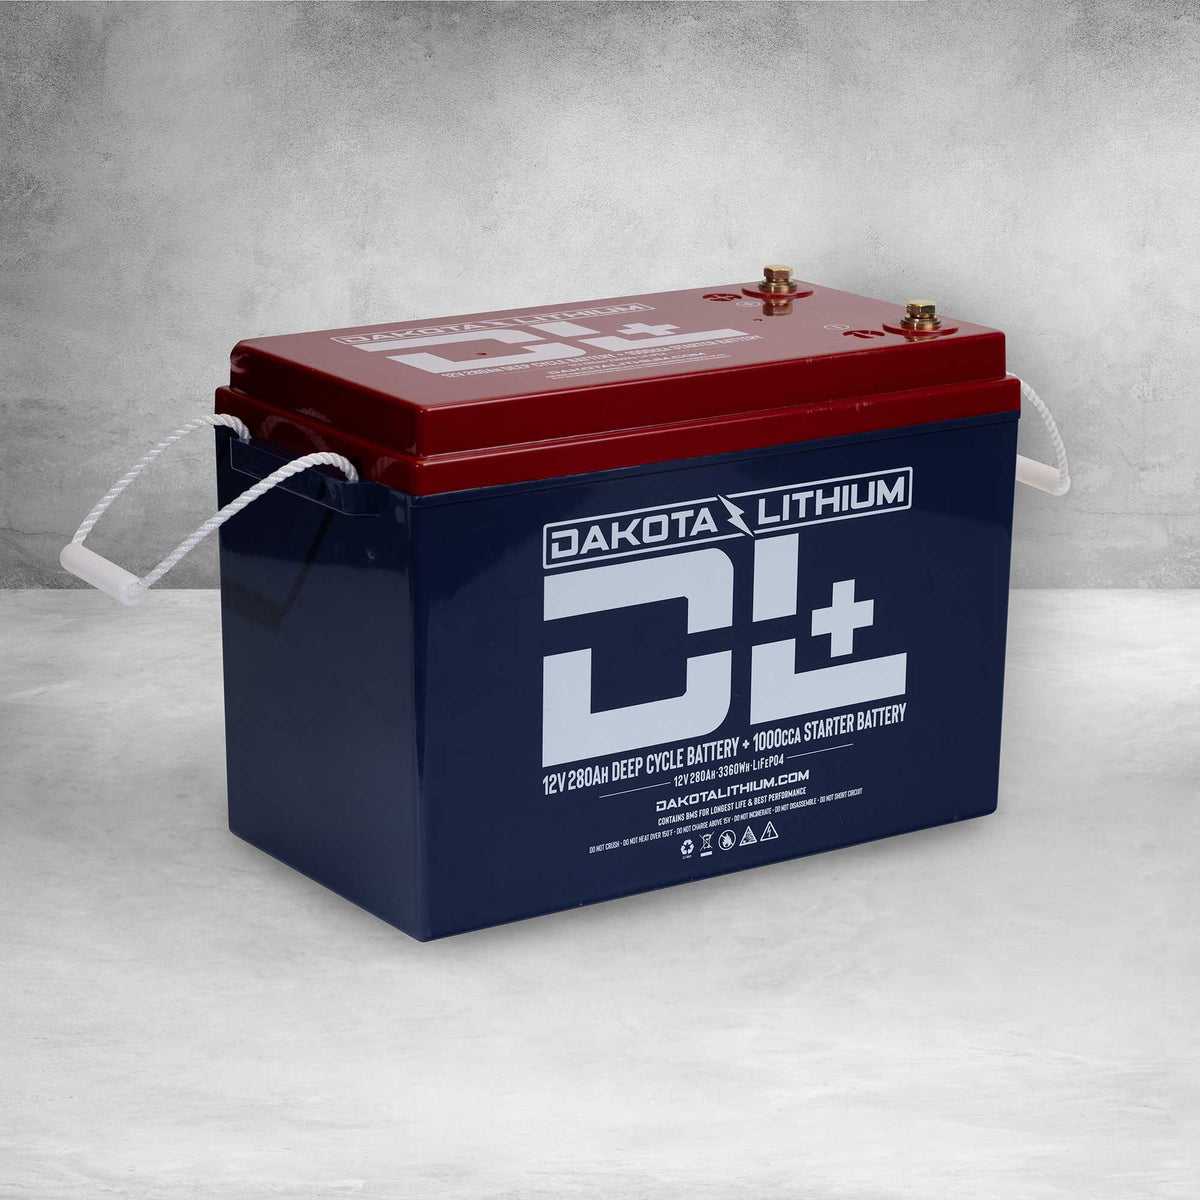 Dakota Lithium | DL+ 12V 280Ah Dual Purpose LifePO4 Battery